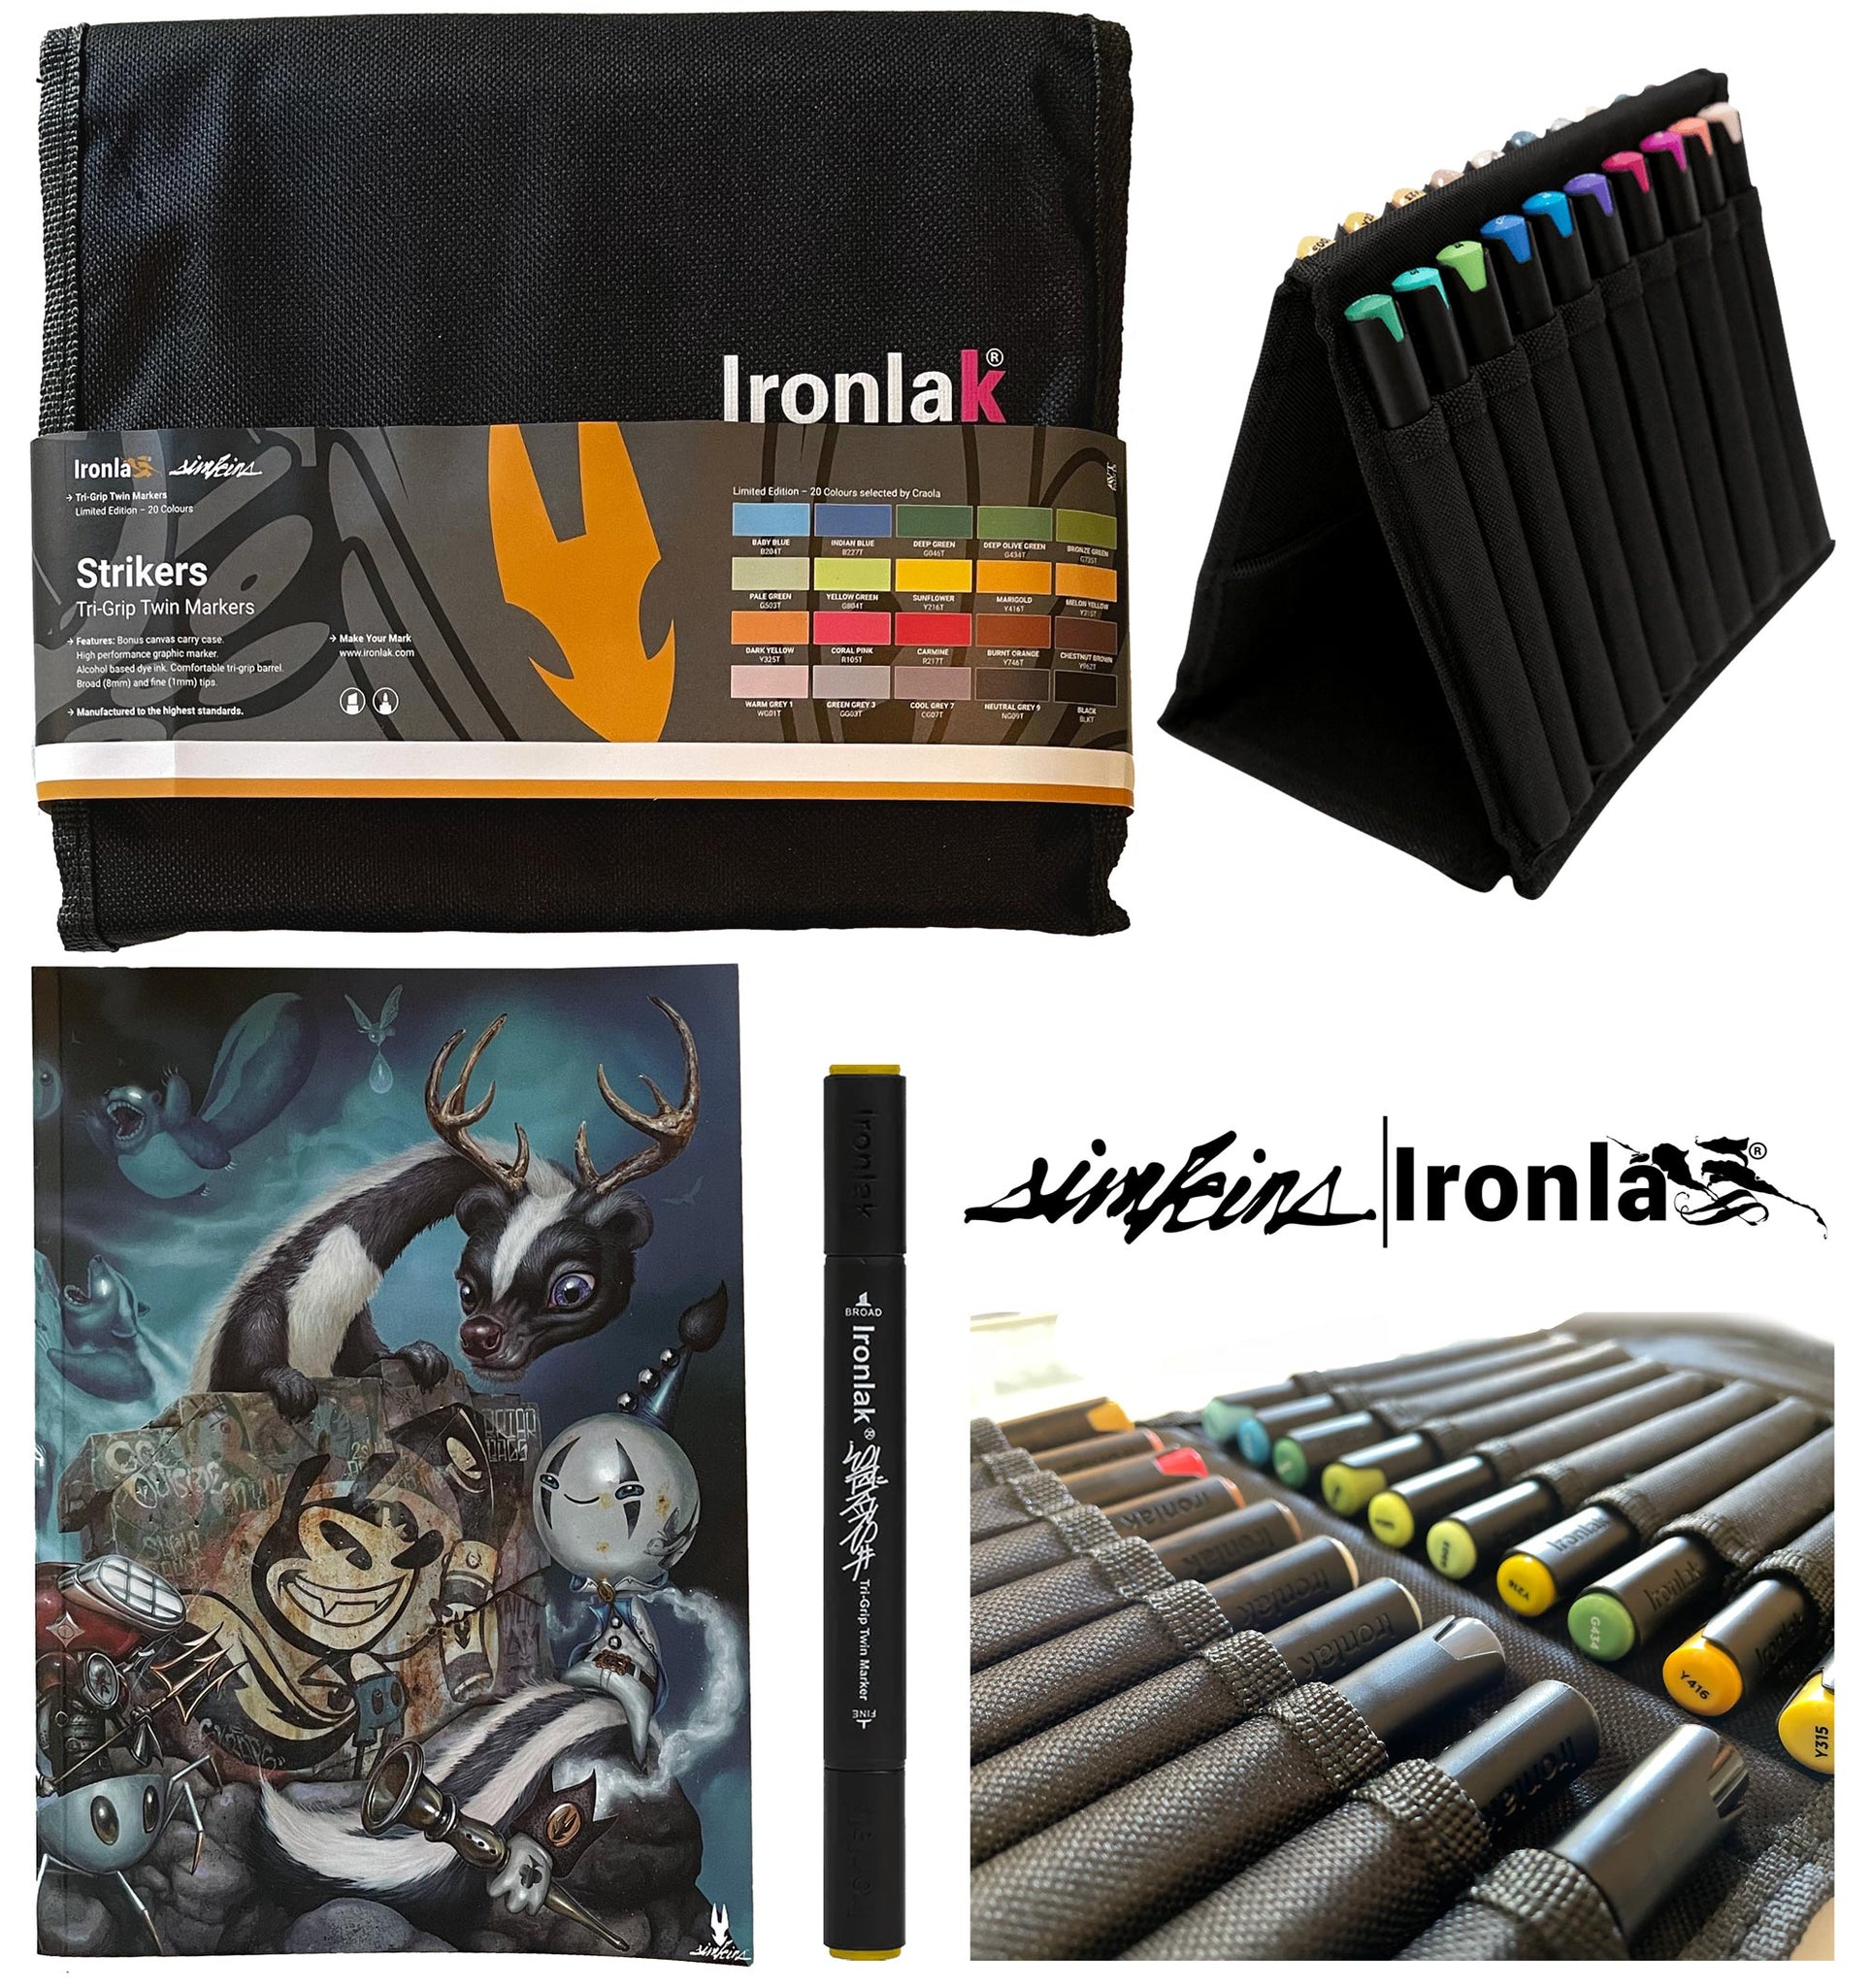 CRAOLA x Ironlak Limited Edition Striker + Sketchbook set – Greg